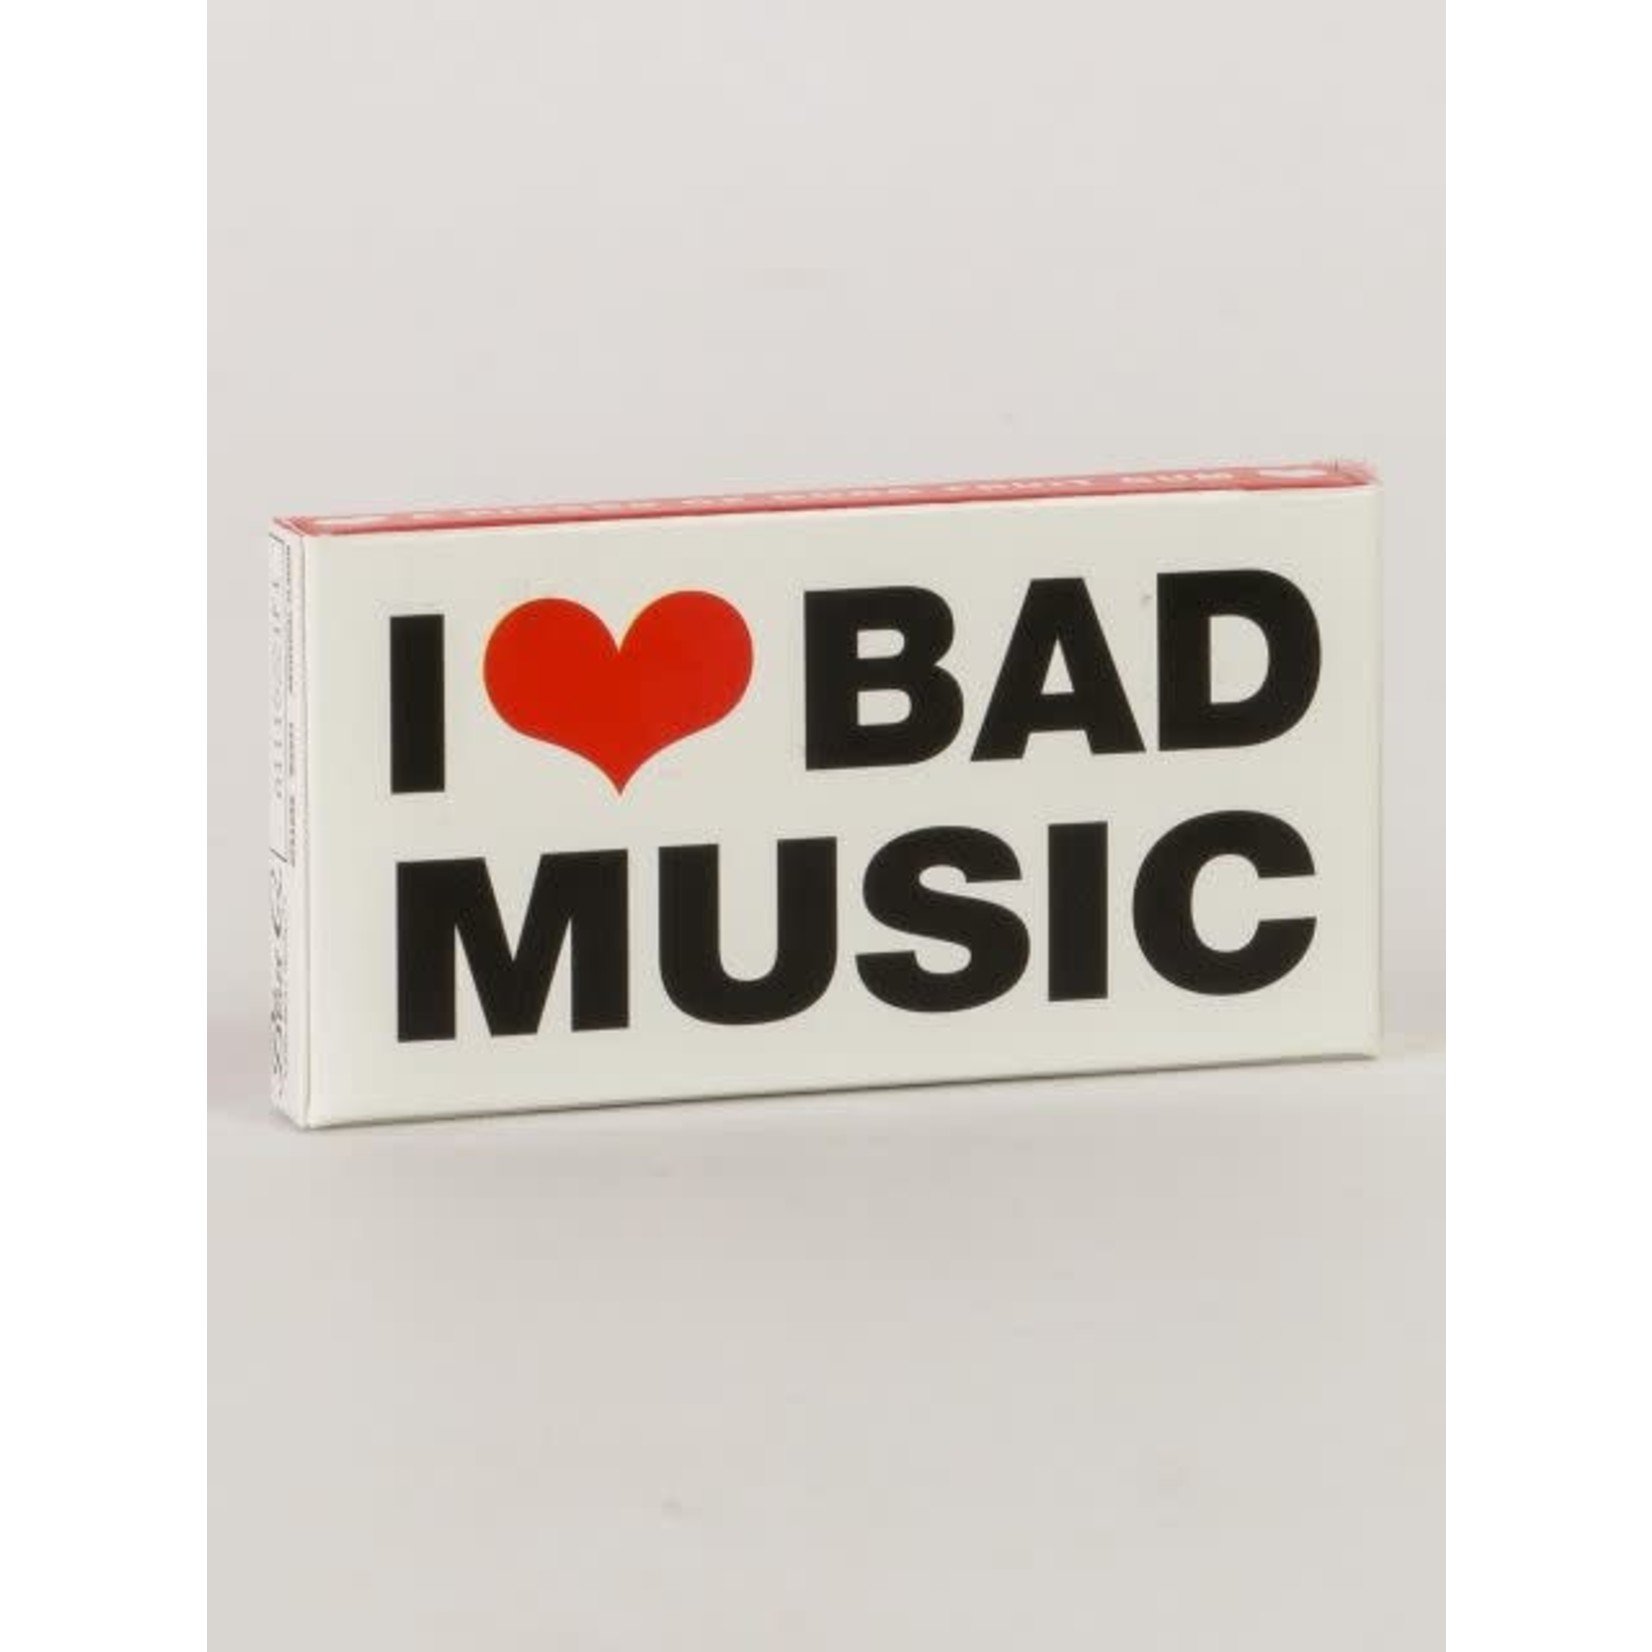 I Heart Bad Music